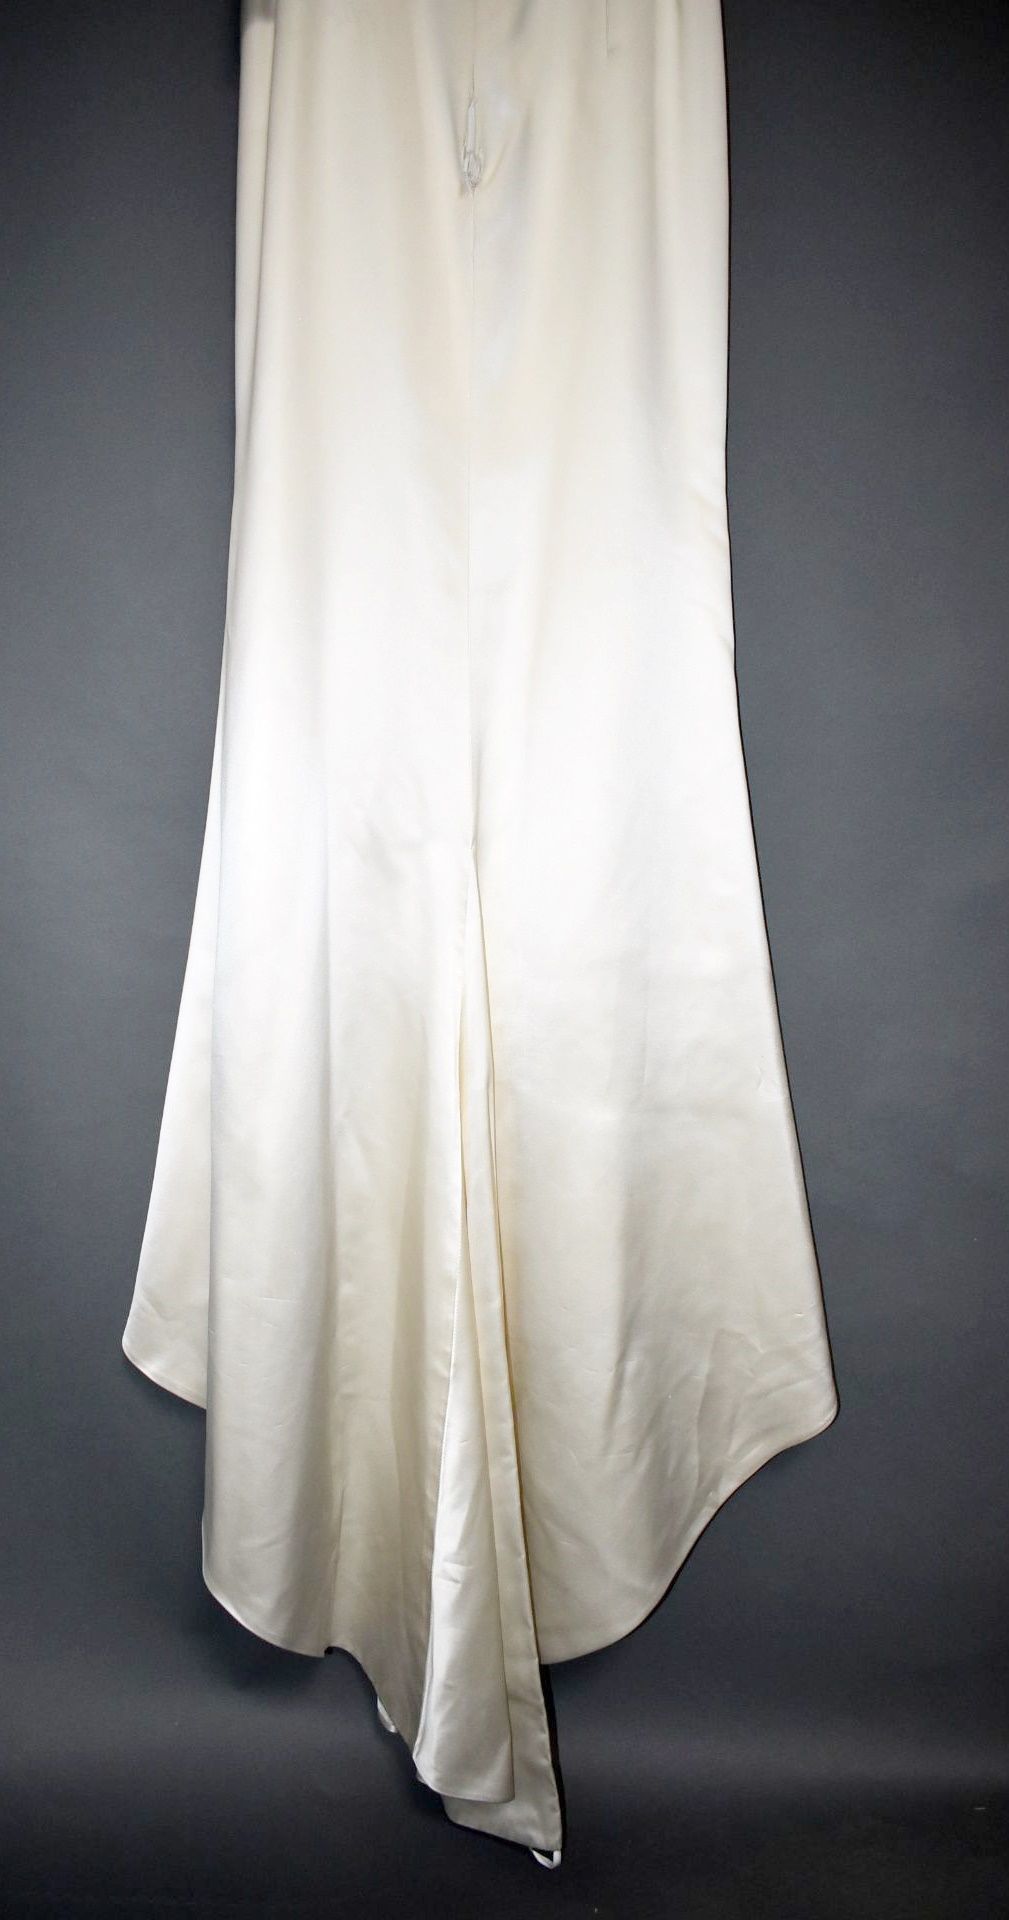 1 x ALAN HANNAH Strapless Lace Bodice Fishtail Designer Wedding Dress Bridal Gown RRP £1,900 UK12 - Image 4 of 6